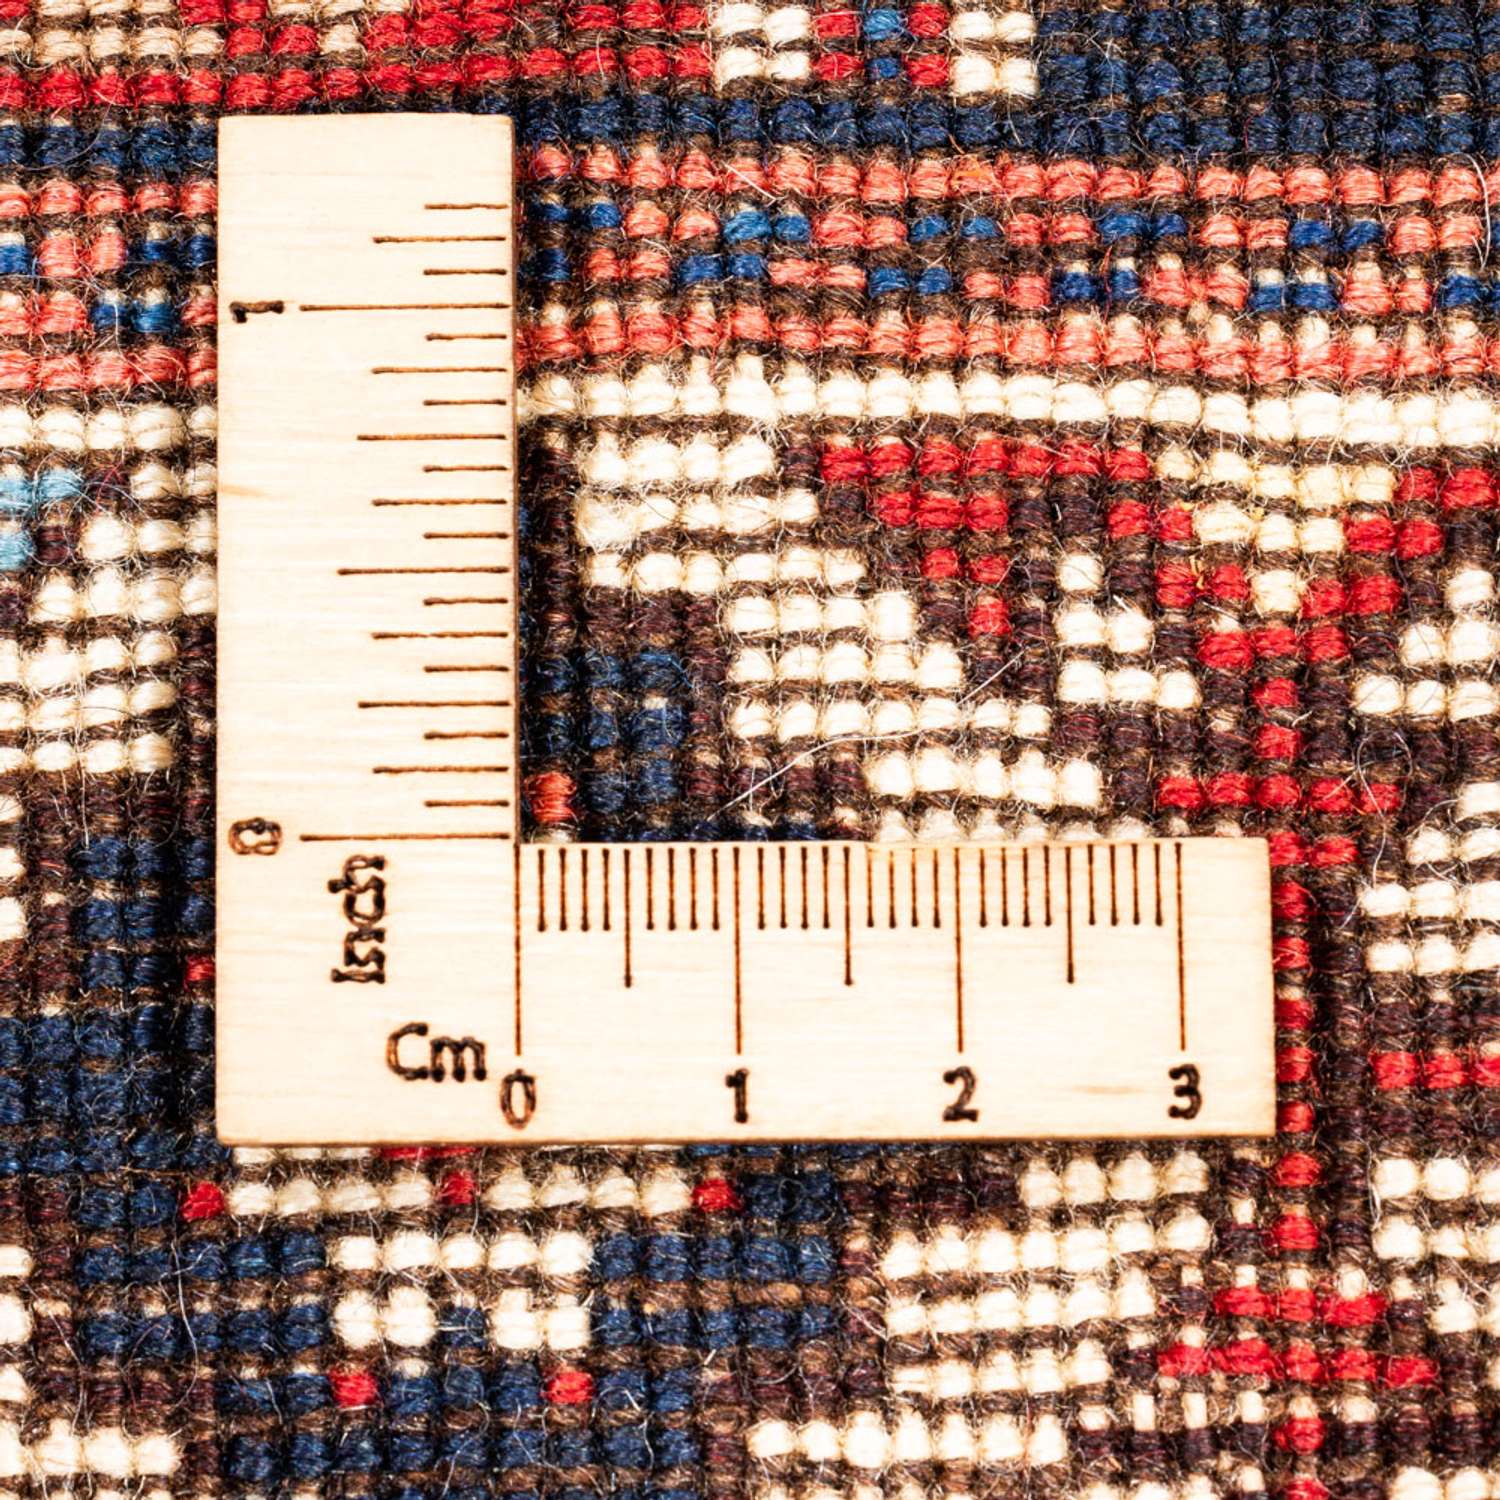 Persisk matta - Nomadic - 128 x 82 cm - röd